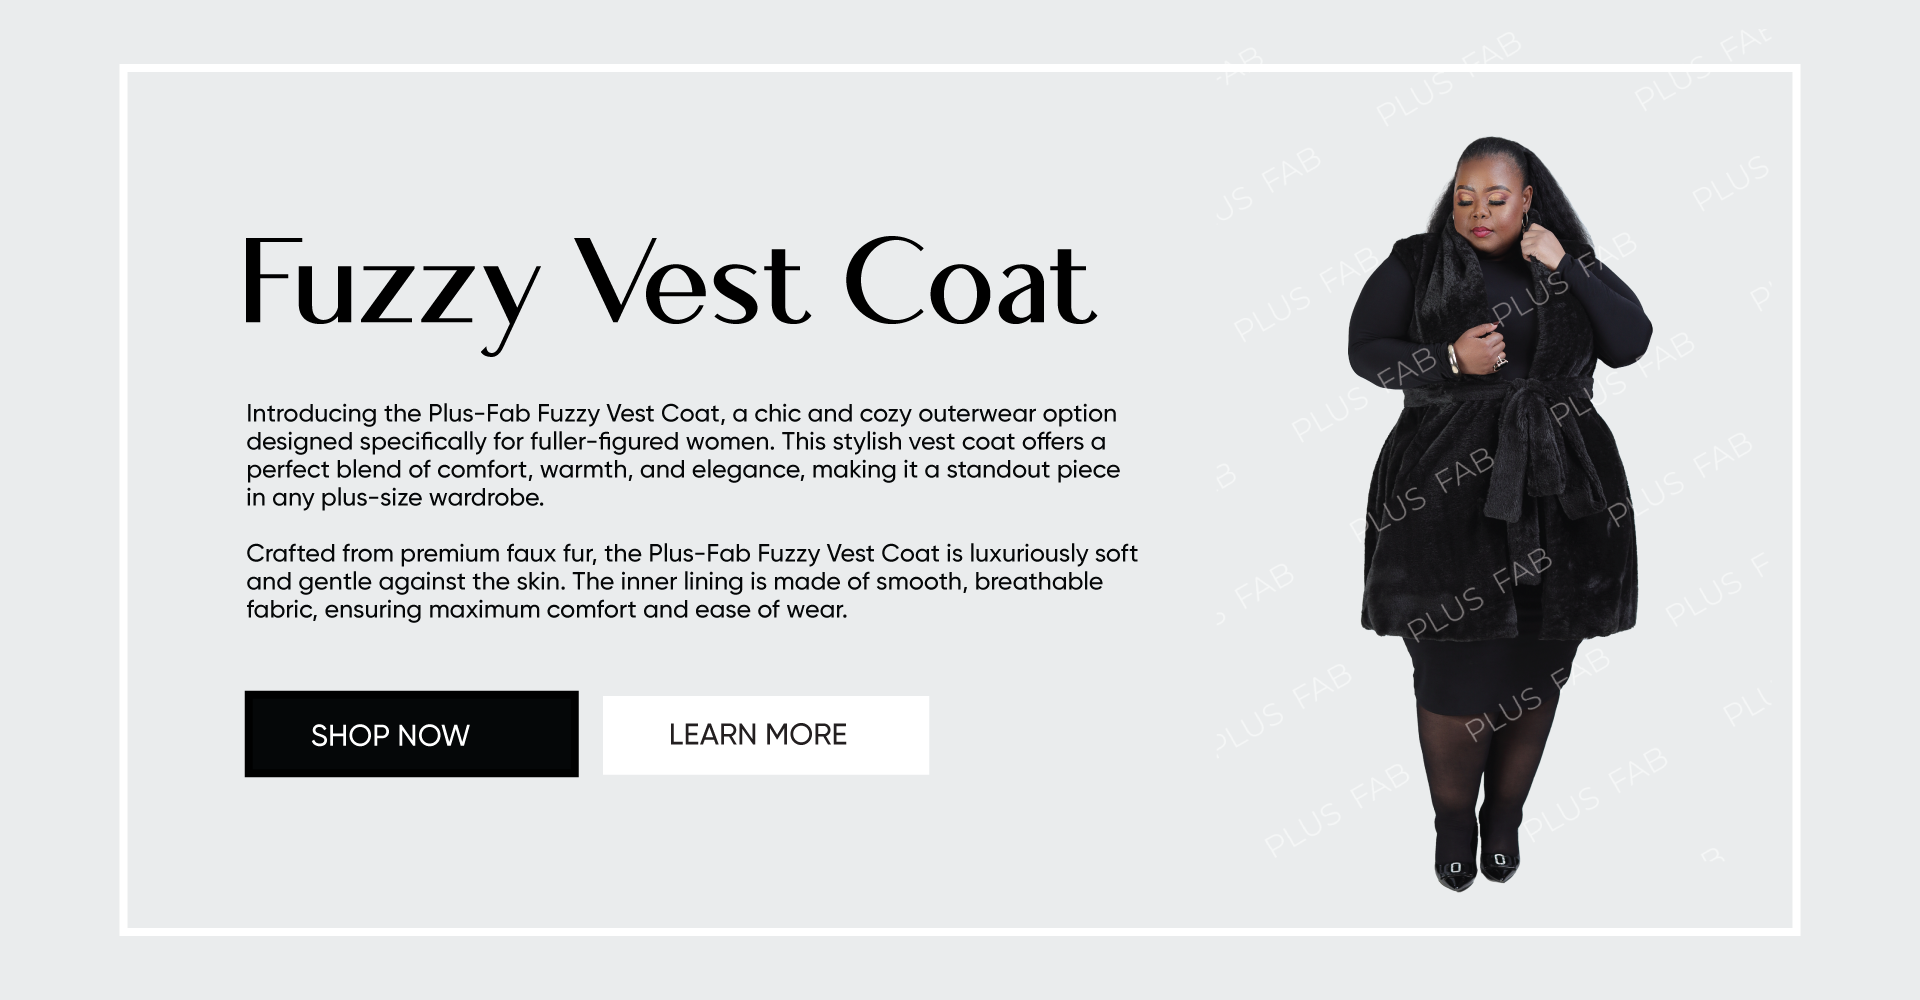 Fuzzy Vest Coat (Homepage Poster)